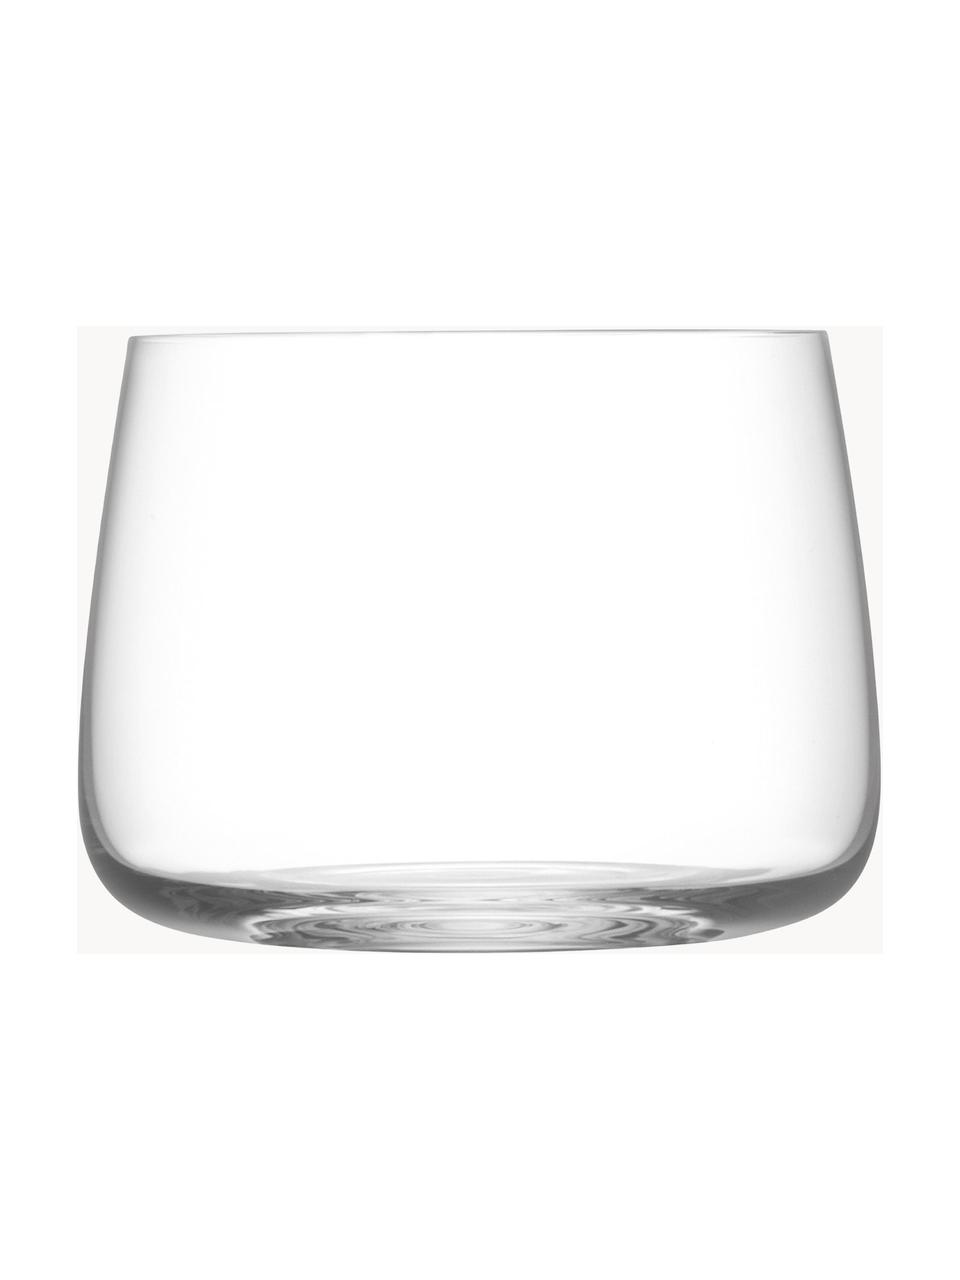 Bicchiere Metropolitan 4 pz, Vetro, Trasparente, Ø 9 x Alt. 7 cm, 360 ml